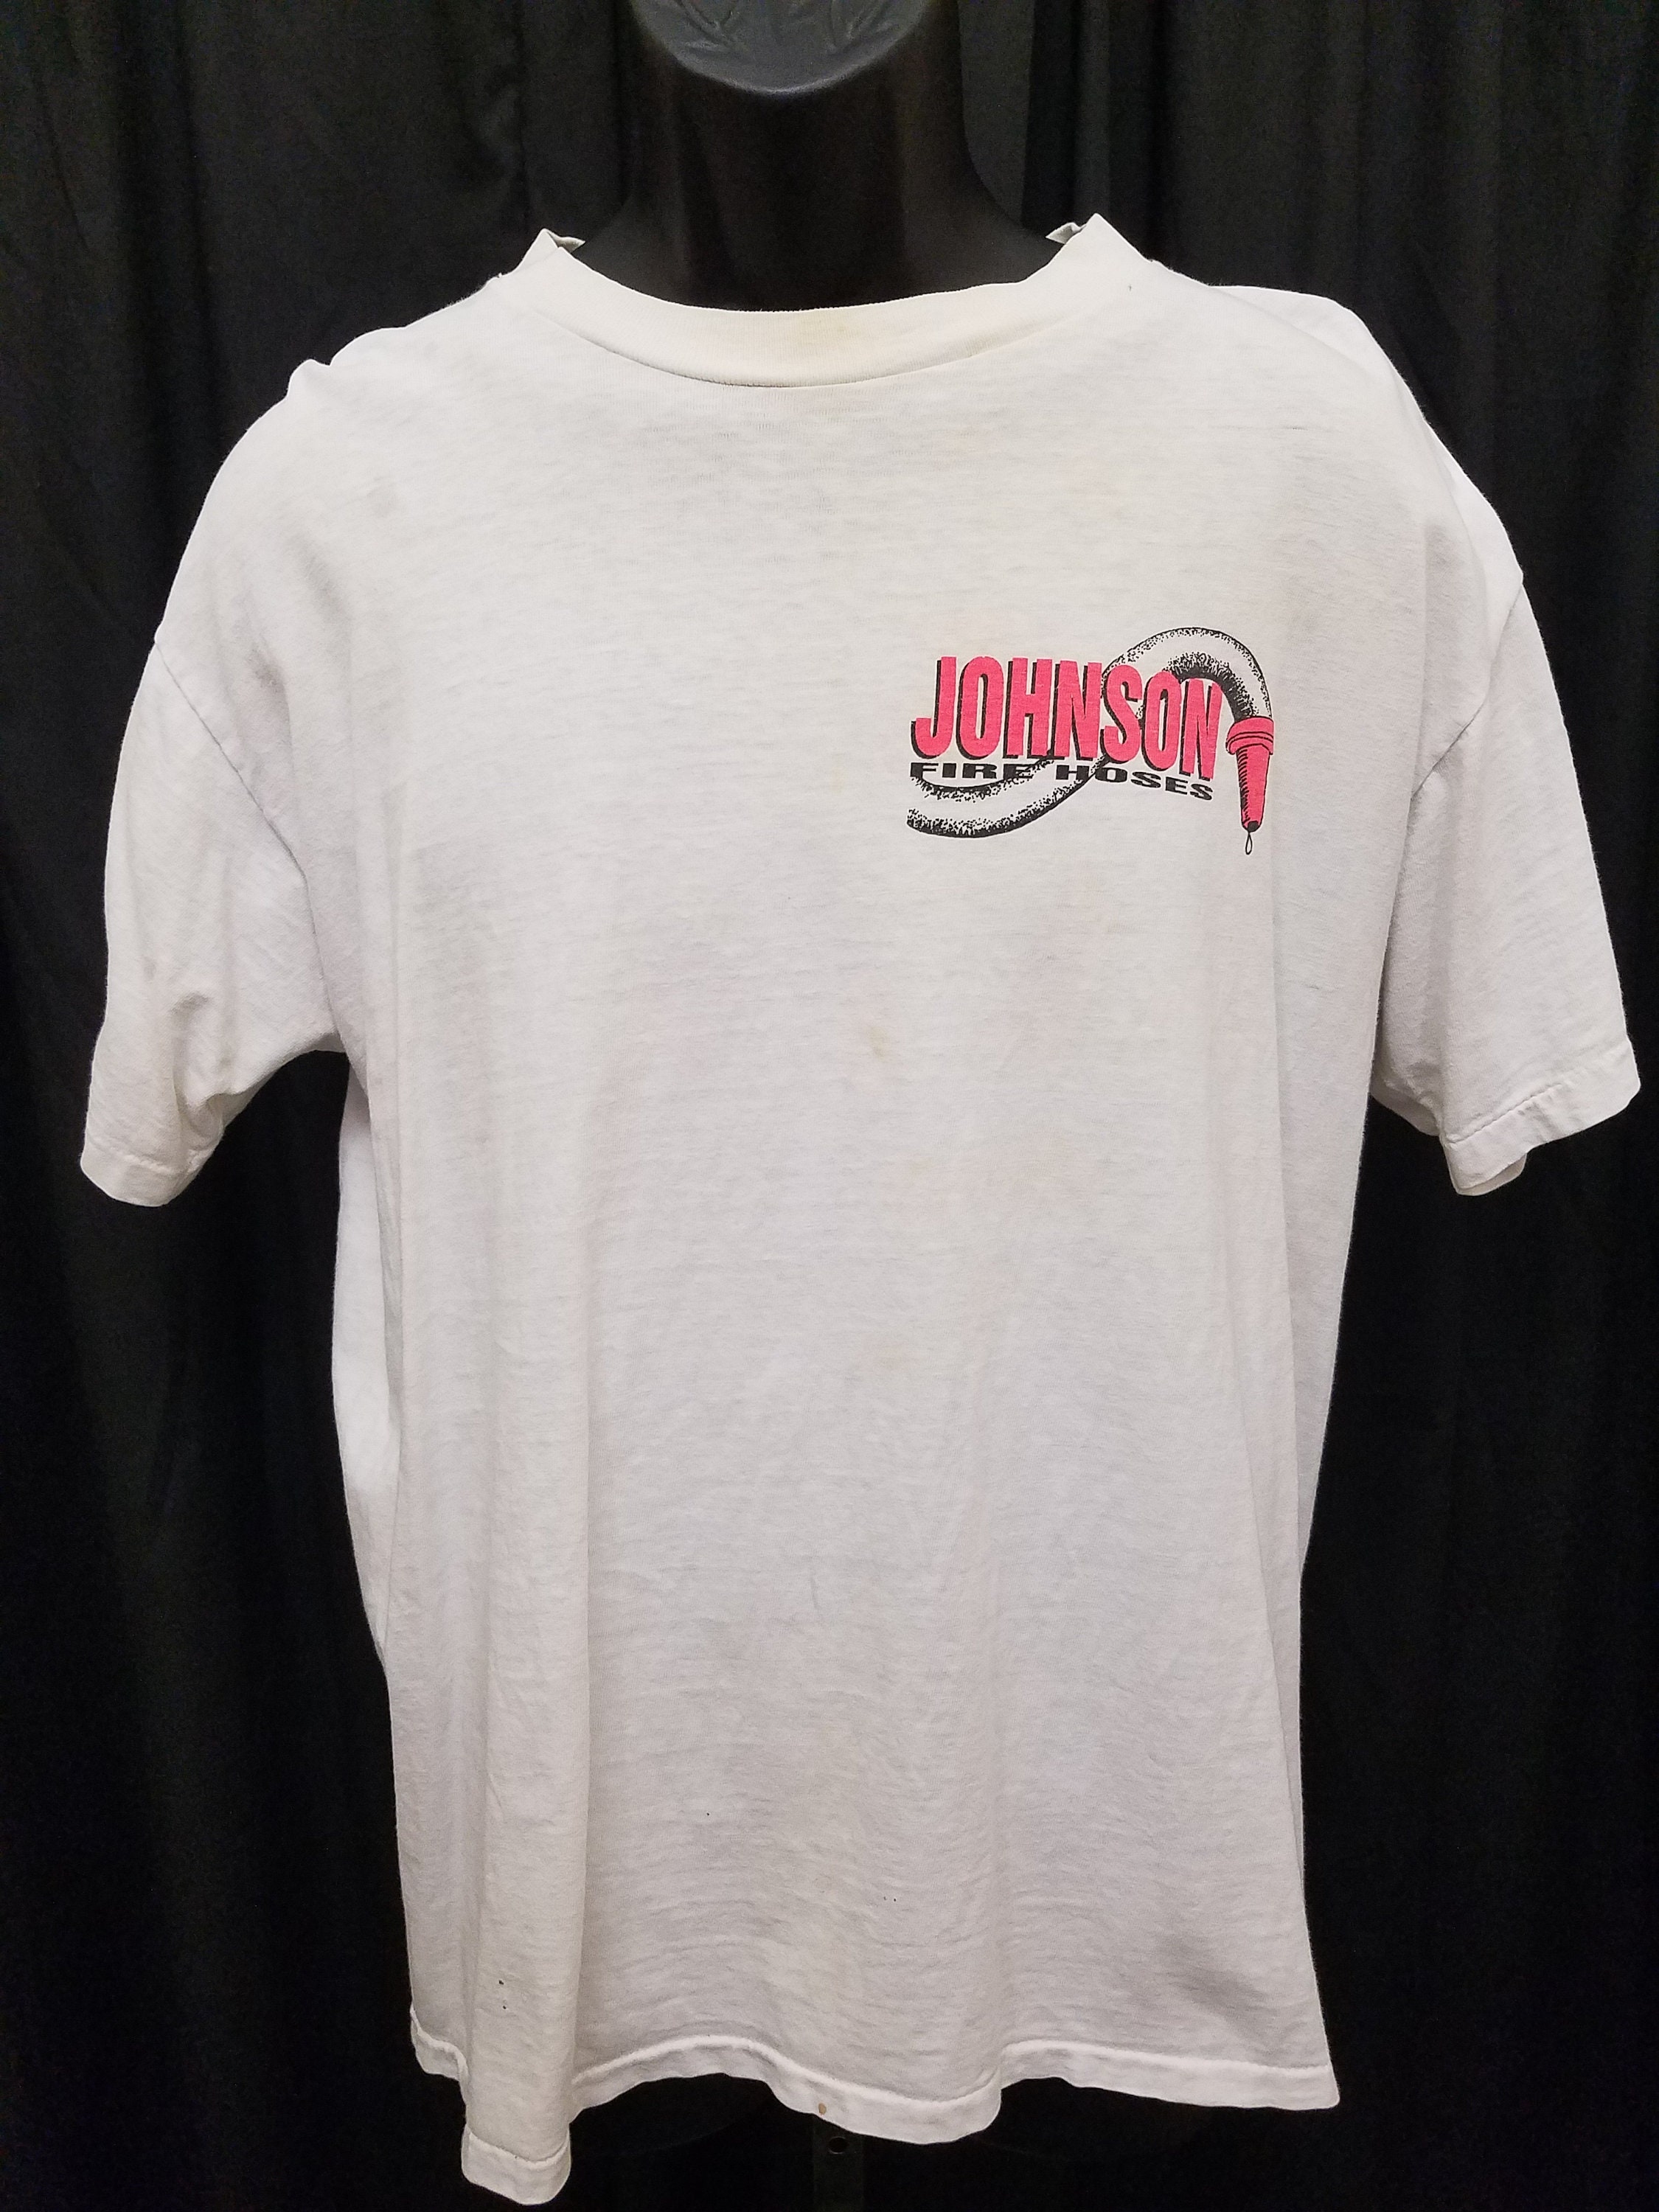 Vintage 1990s Big Johnson Fire Hoses Graphic T-shirt L White - Etsy